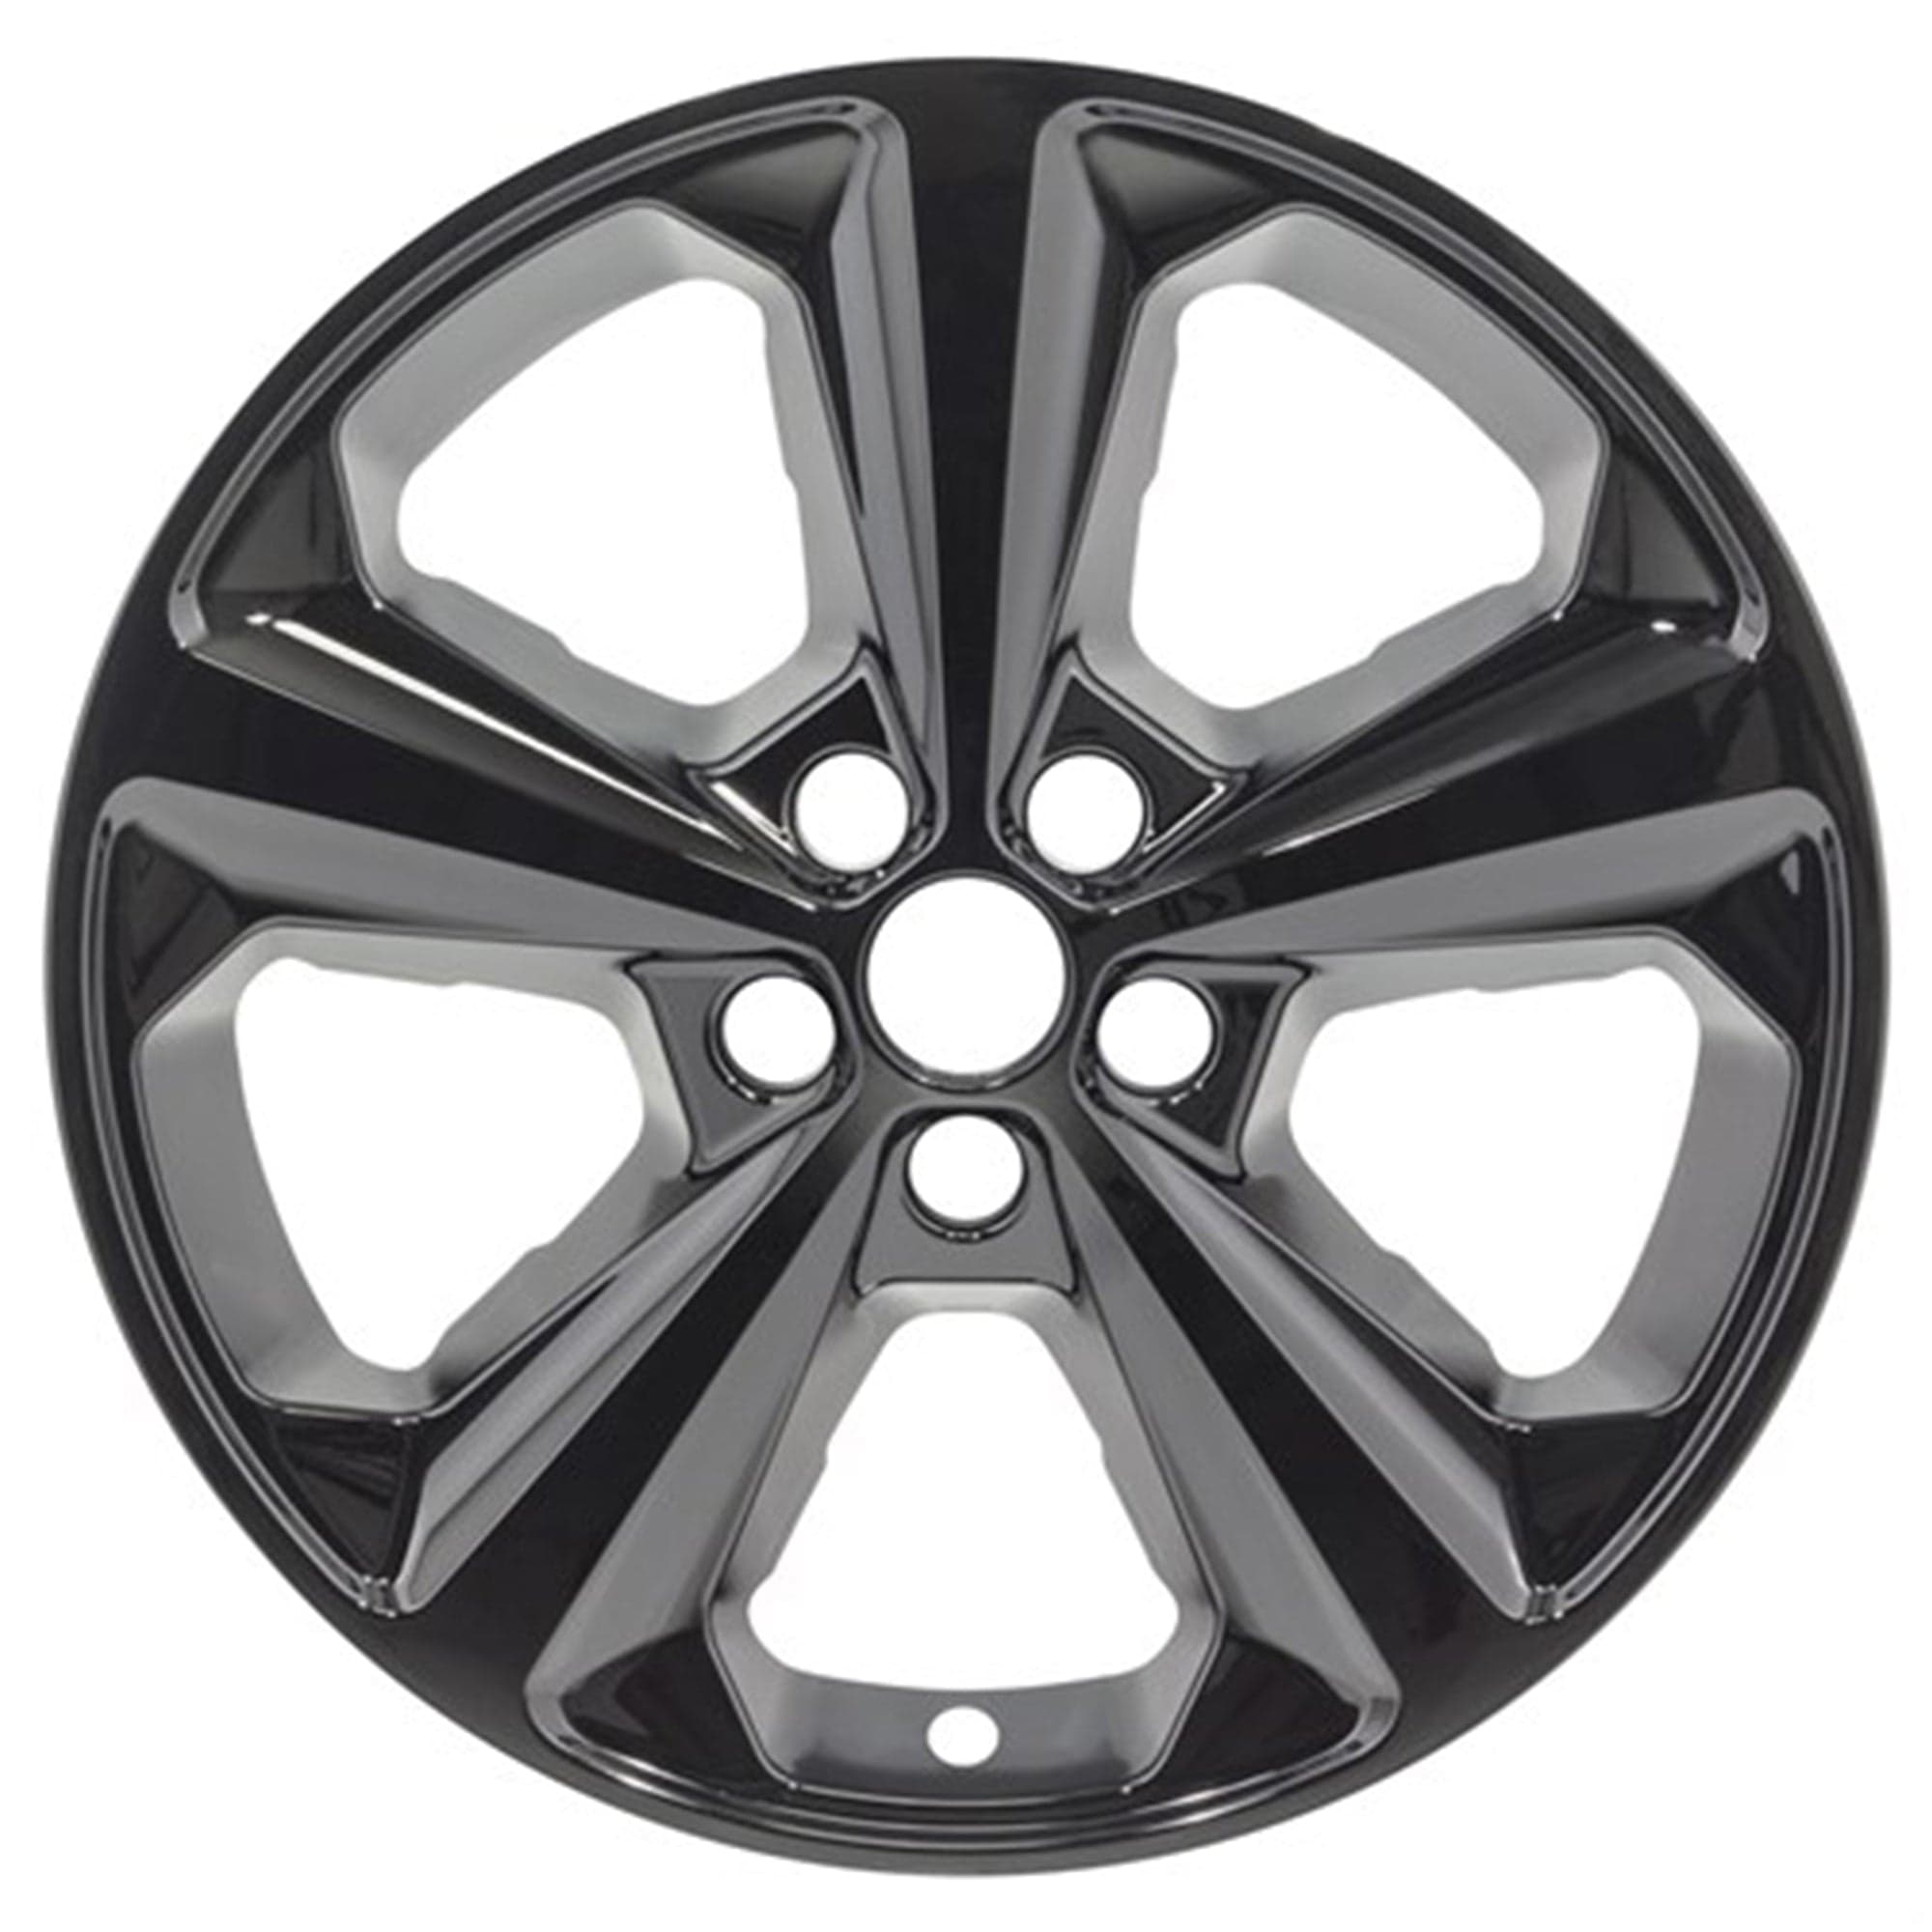 PacRim 8367-GB 18" Ford Edge (15-22) Gloss Black Wheel Skin Set